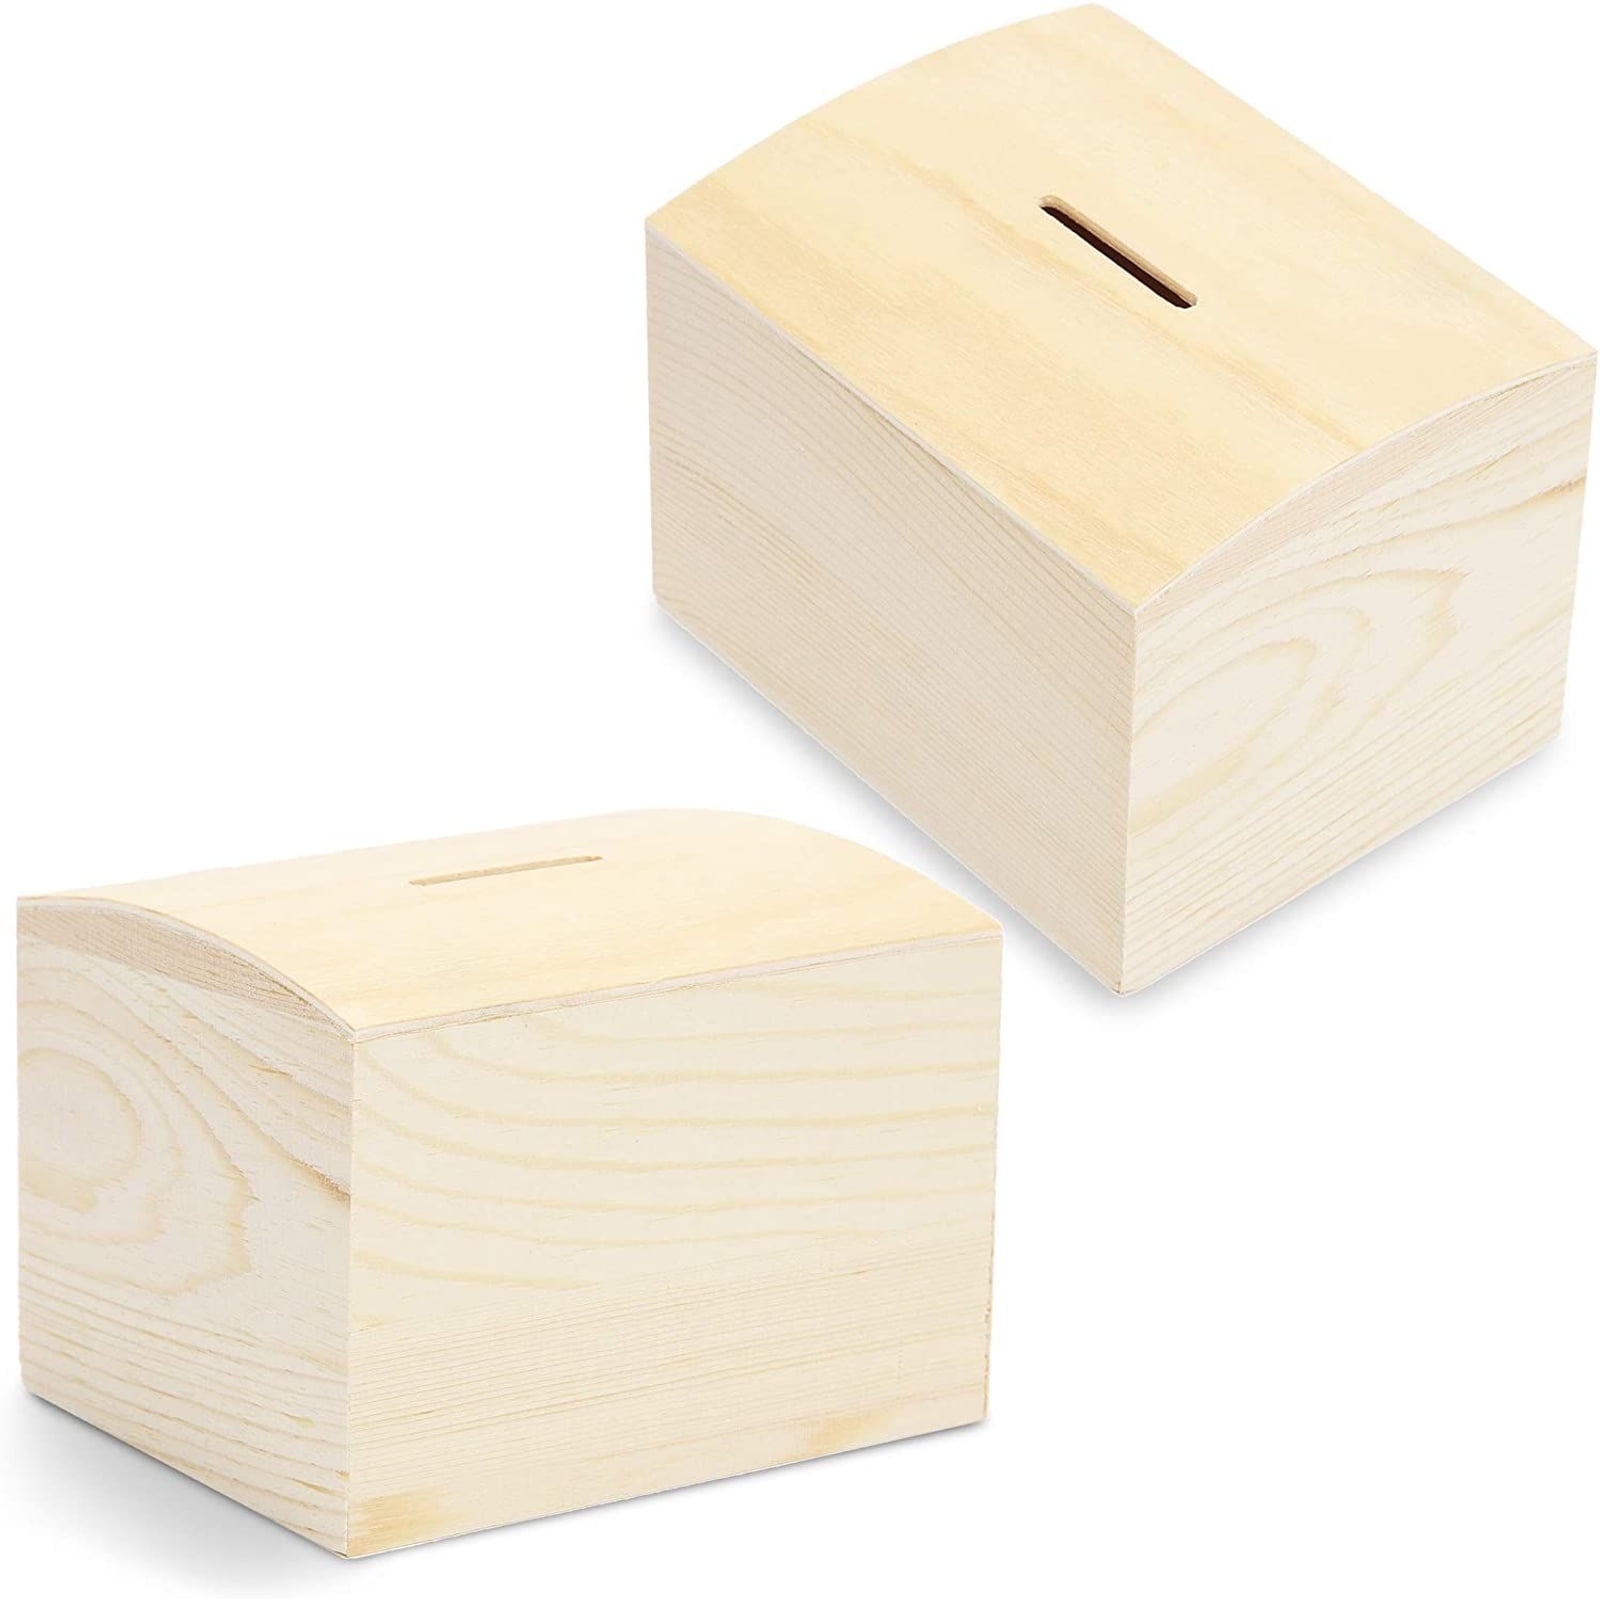 1 Pcs Handmade Safe Money Box Wooden Piggy Bank 4 Inch For Gift home Decor 